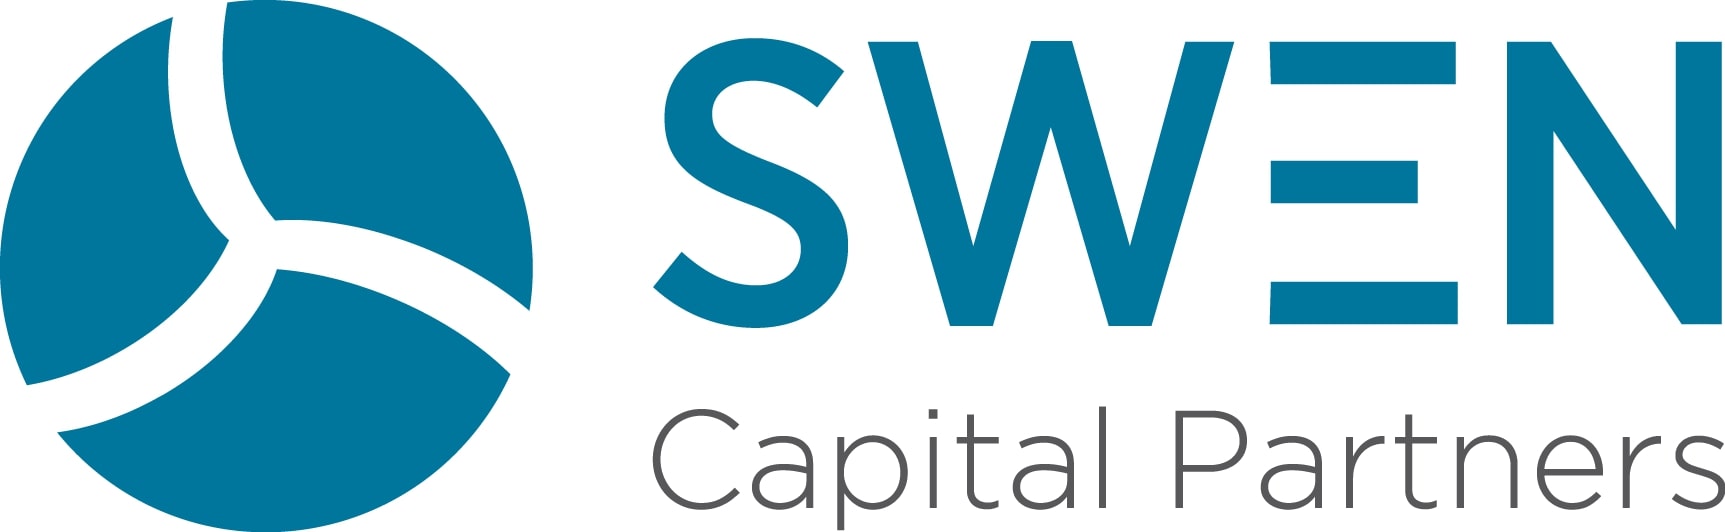 Swen-Capital-Partners-ART-logo-2018